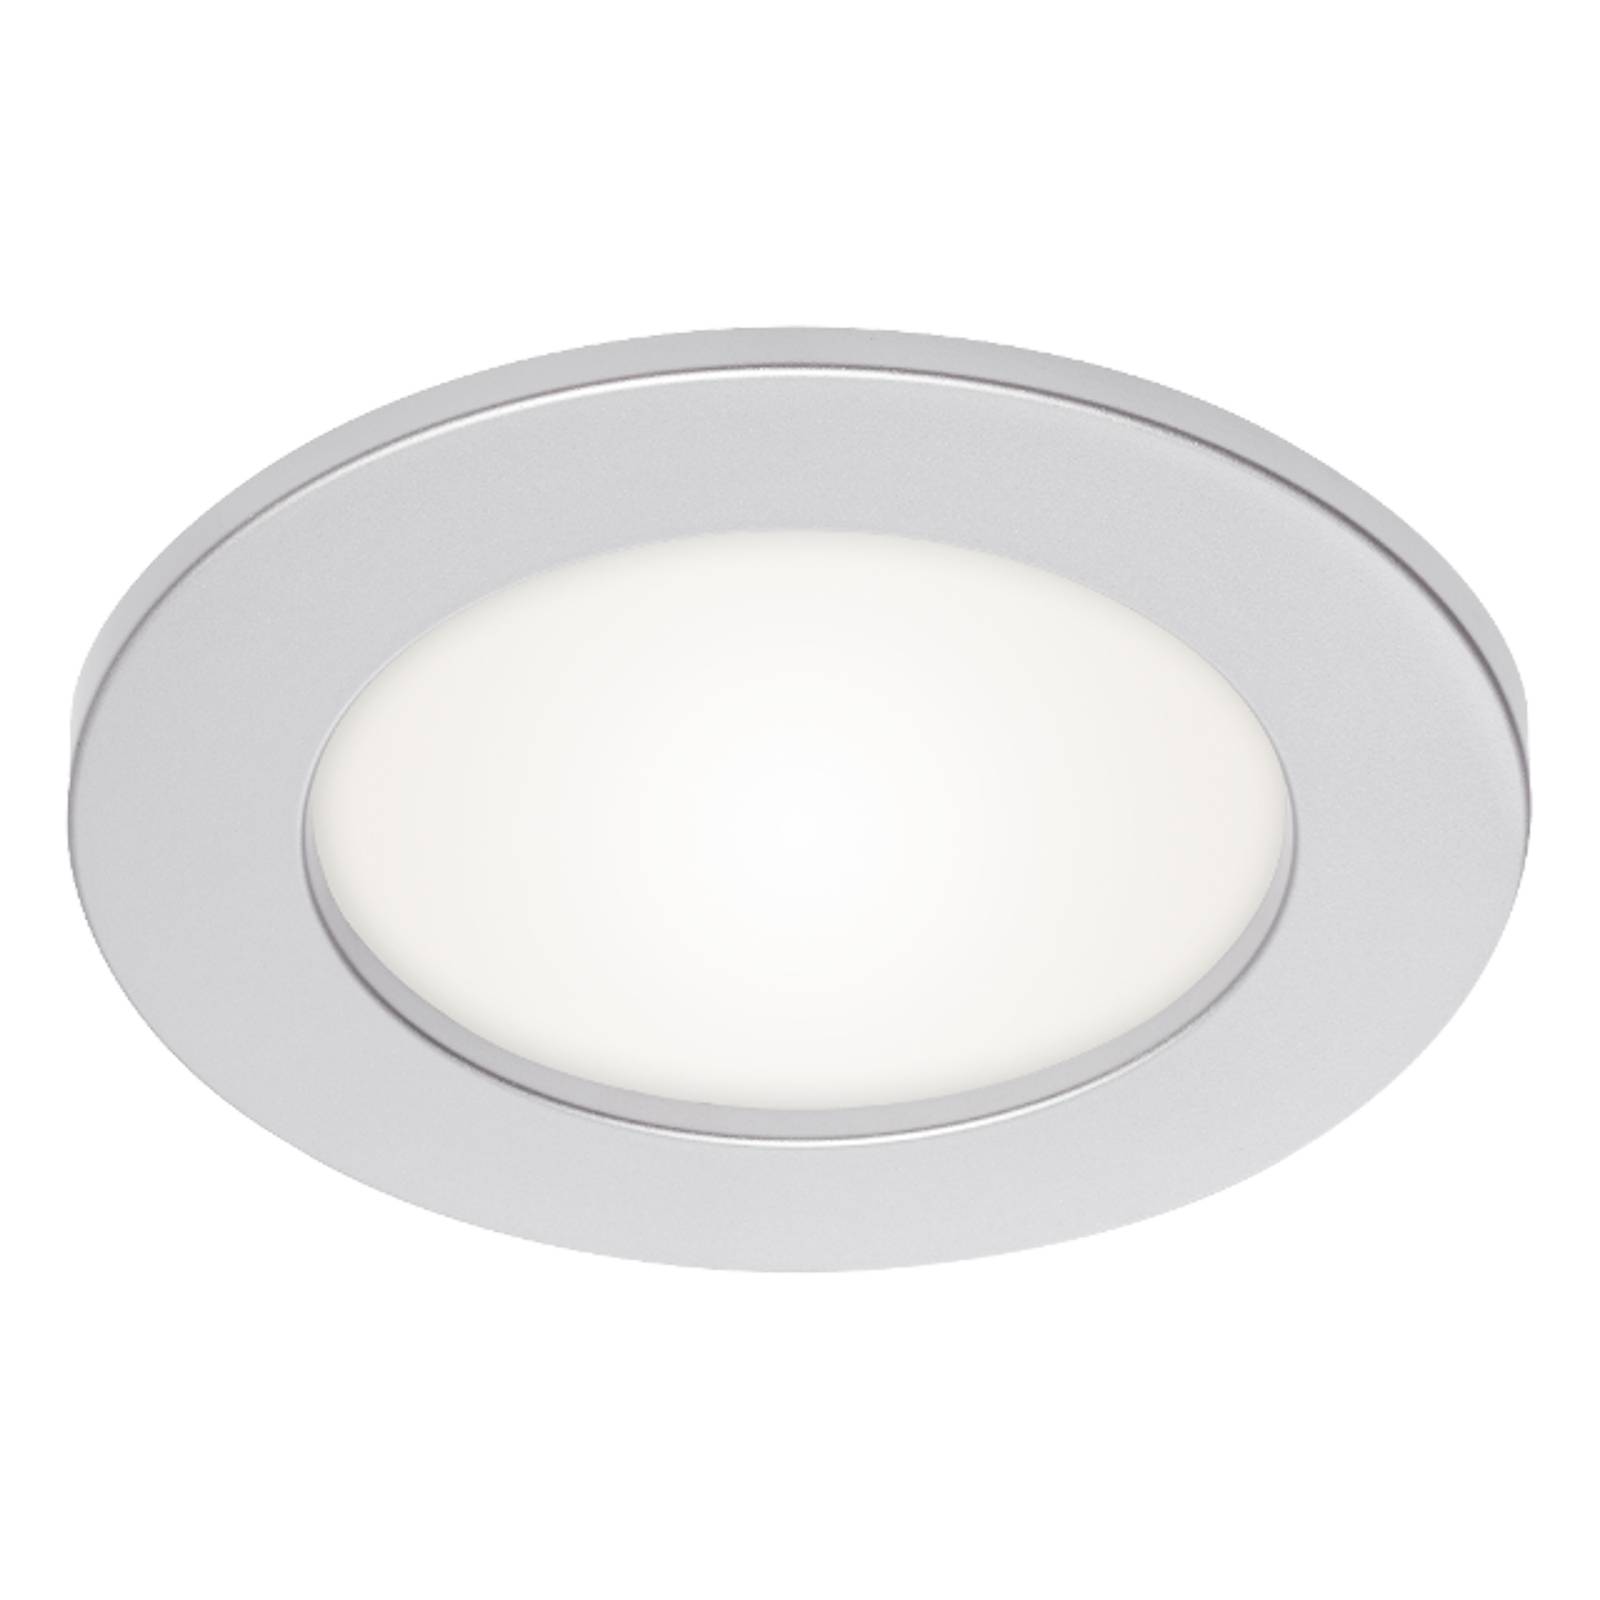 Prios Cadance LED recessed light, silver, 24 cm